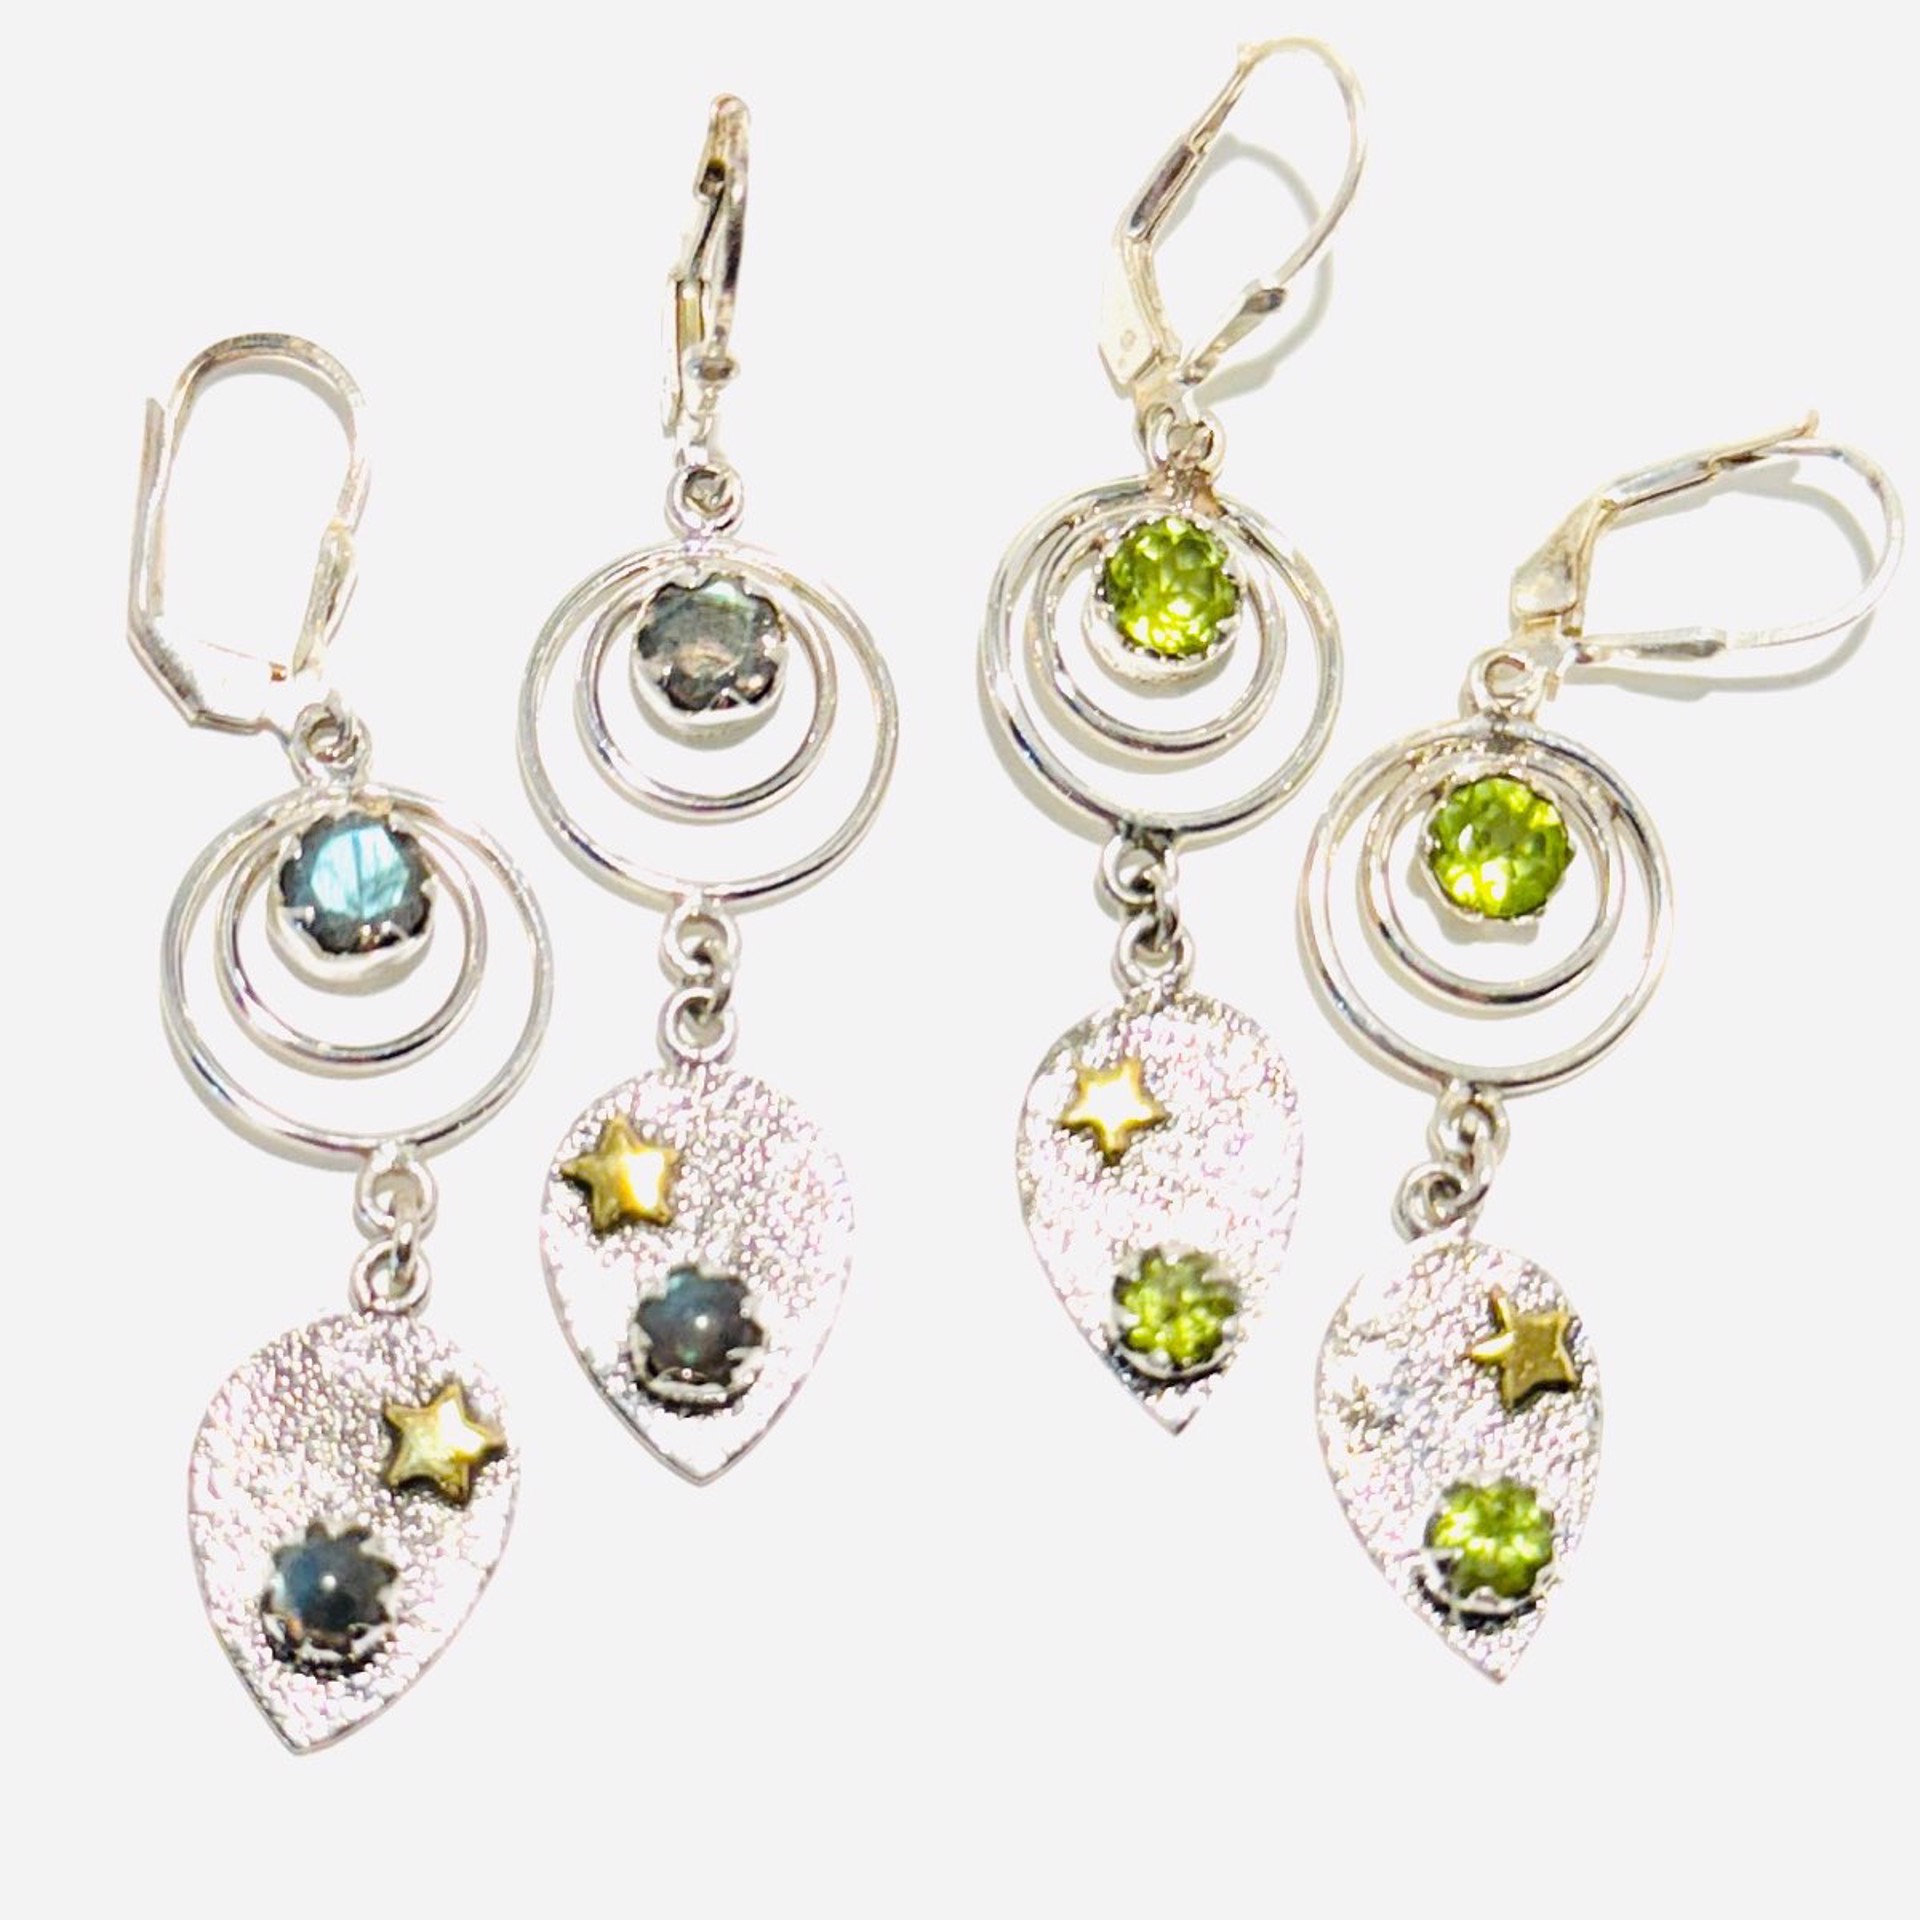 Amethyst, Garnet, Peridot, Labradorite, Sleeping Beauty Turquoise Earrings MONSE-910 by Monica Mehta